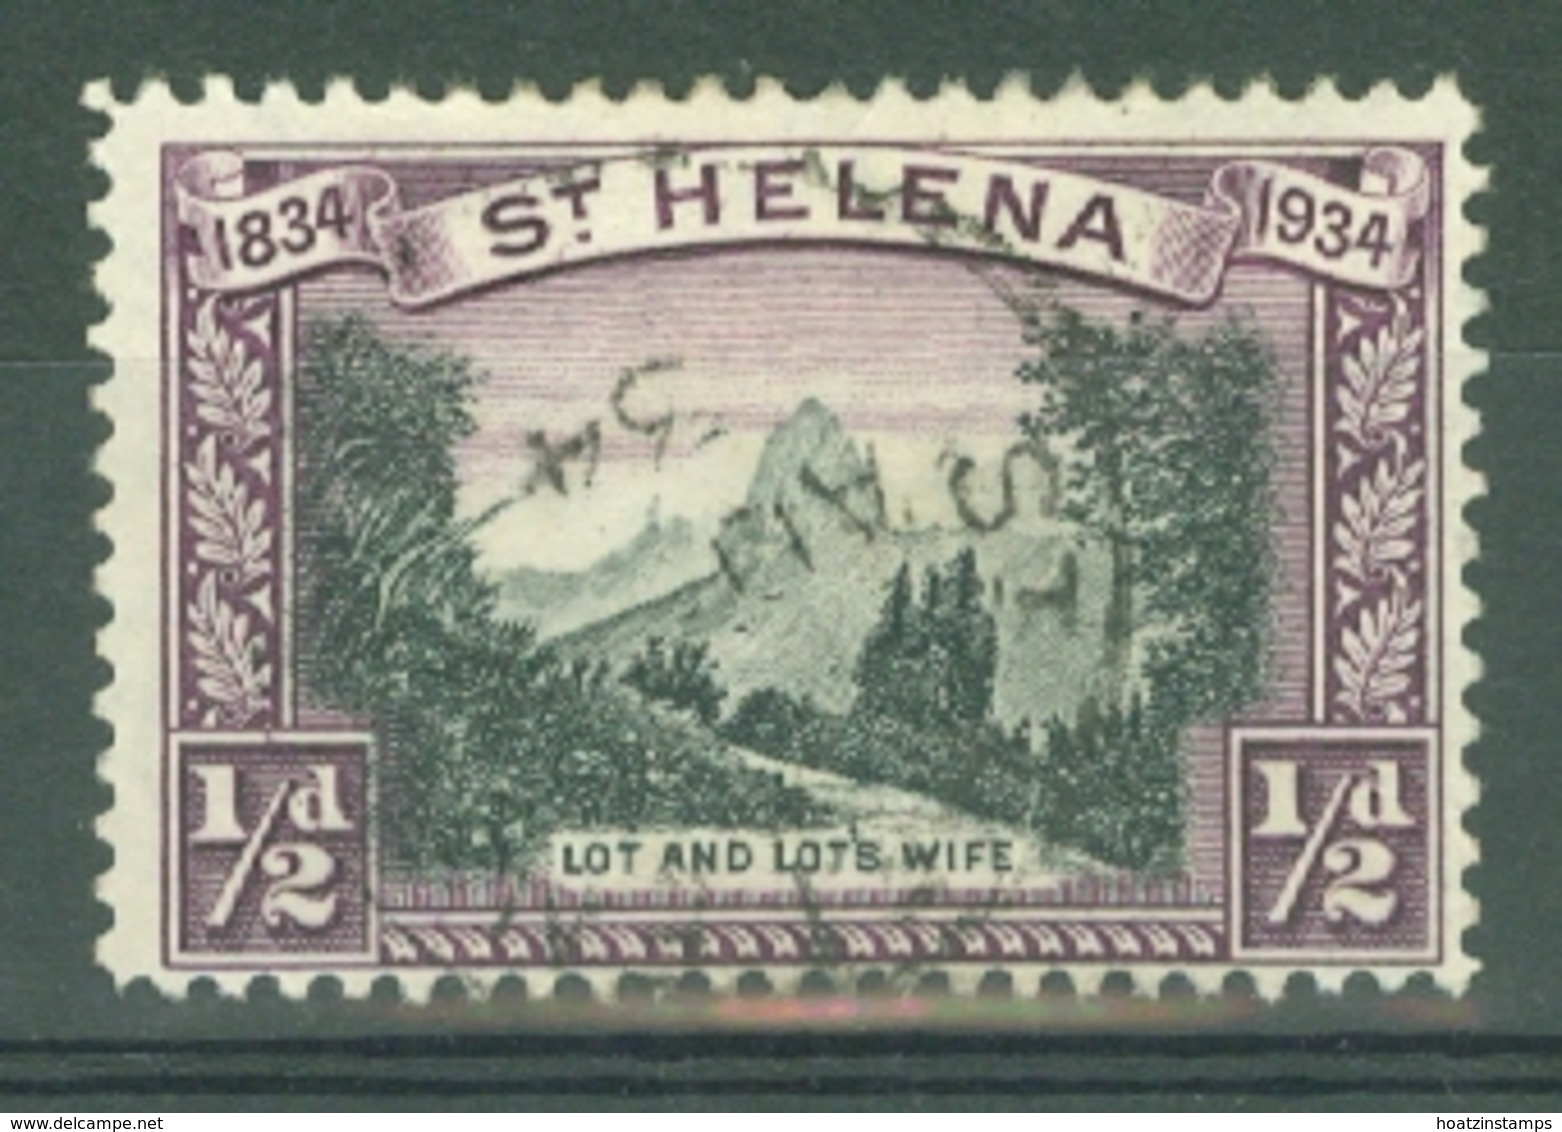 St Helena: 1934   Centenary Of British Colonisation     SG114    ½d     Used - Saint Helena Island